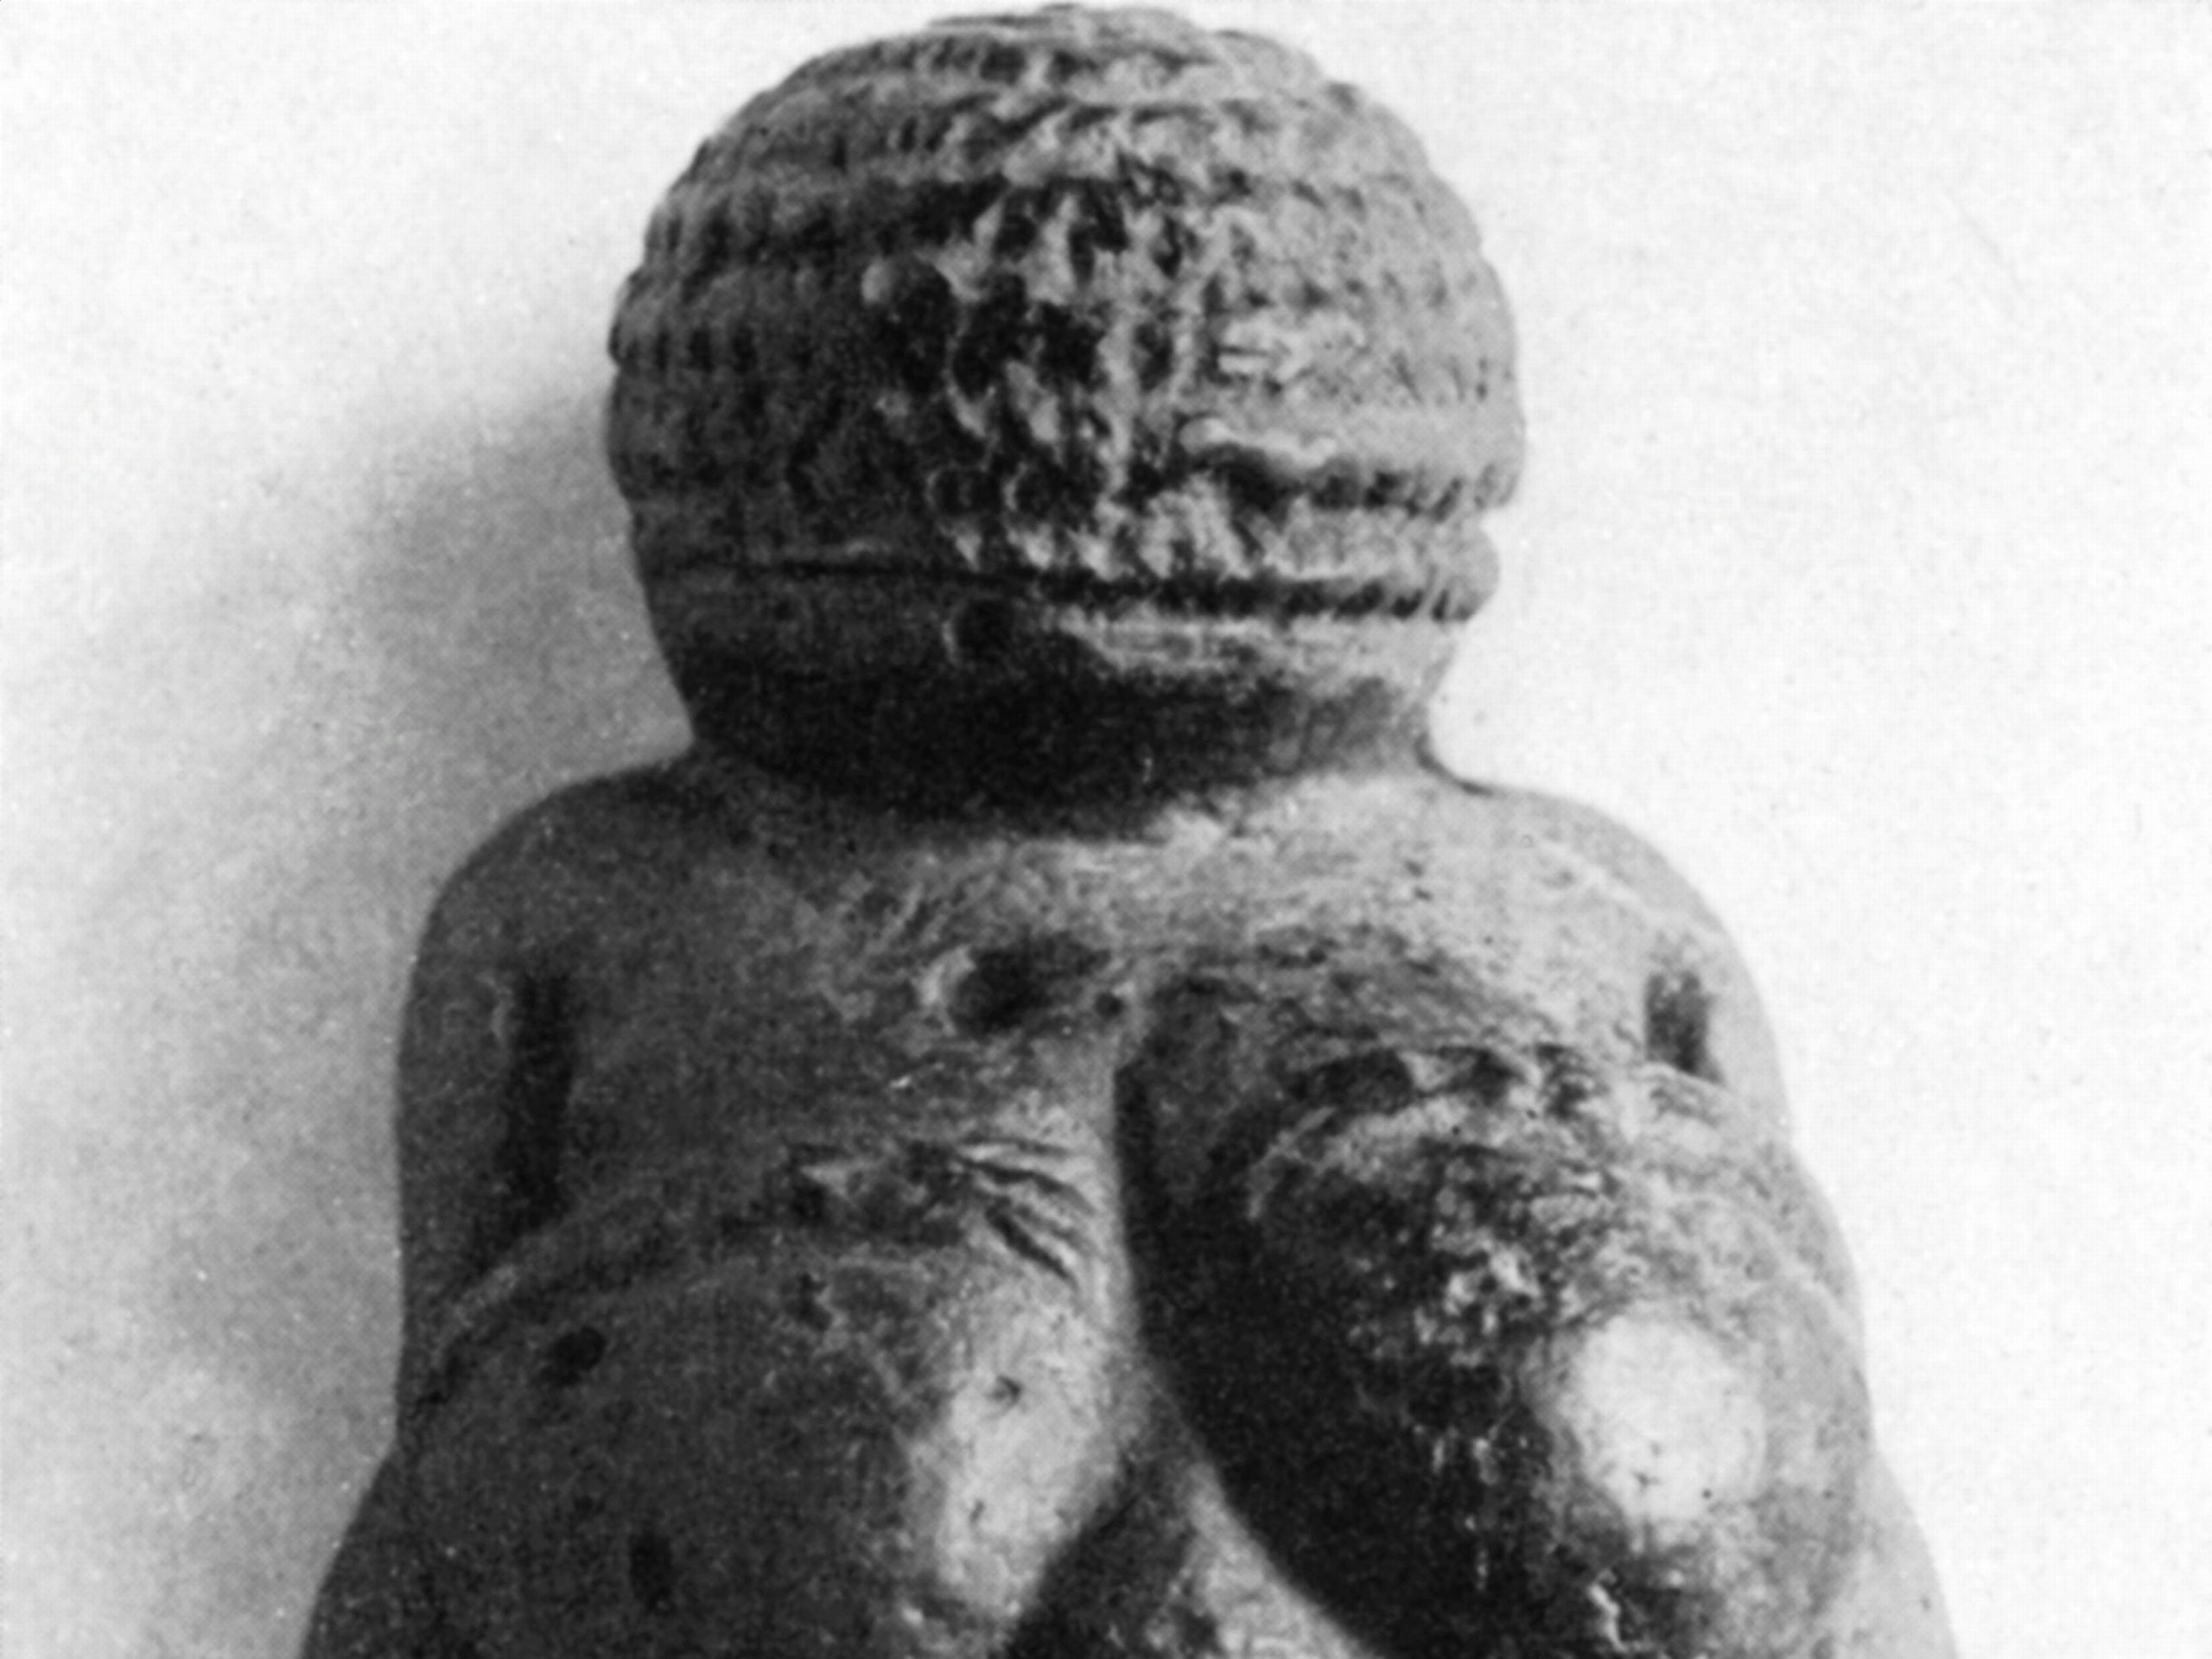 A photo of the Venus of Willendorf sculpture